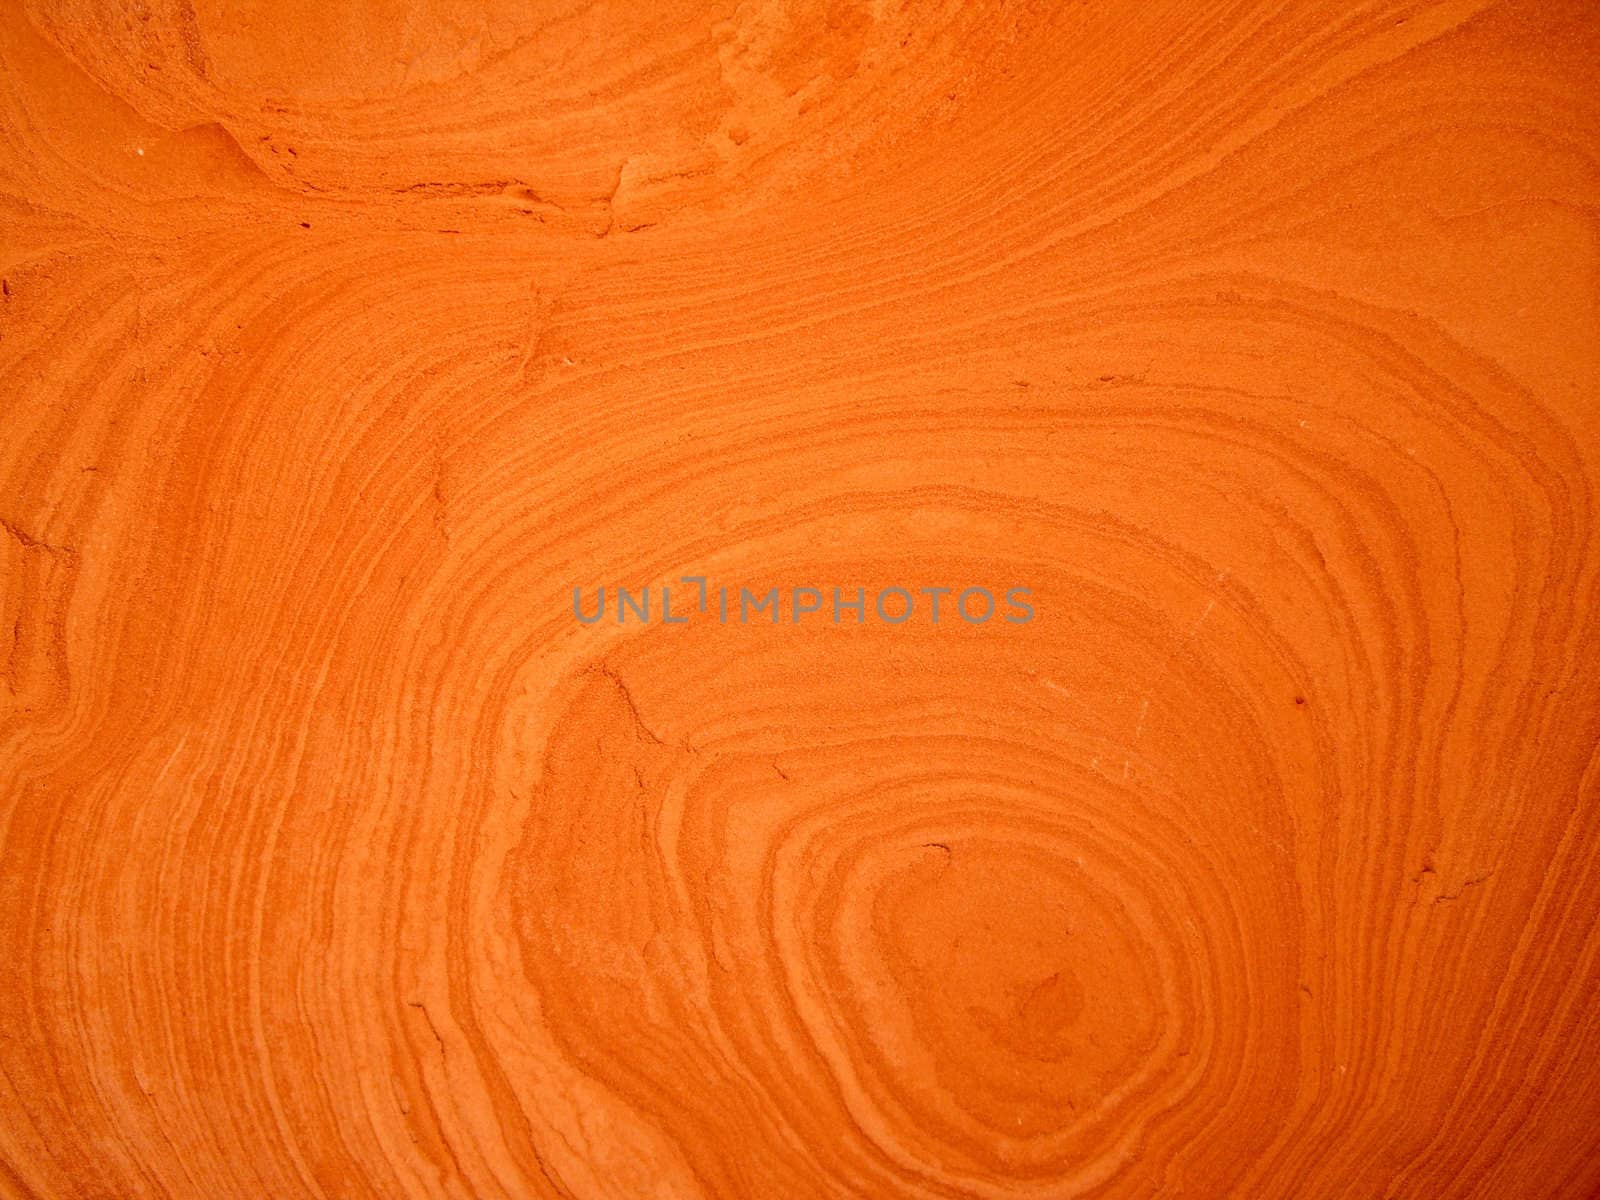 Soft Orange Sandstone  by emattil